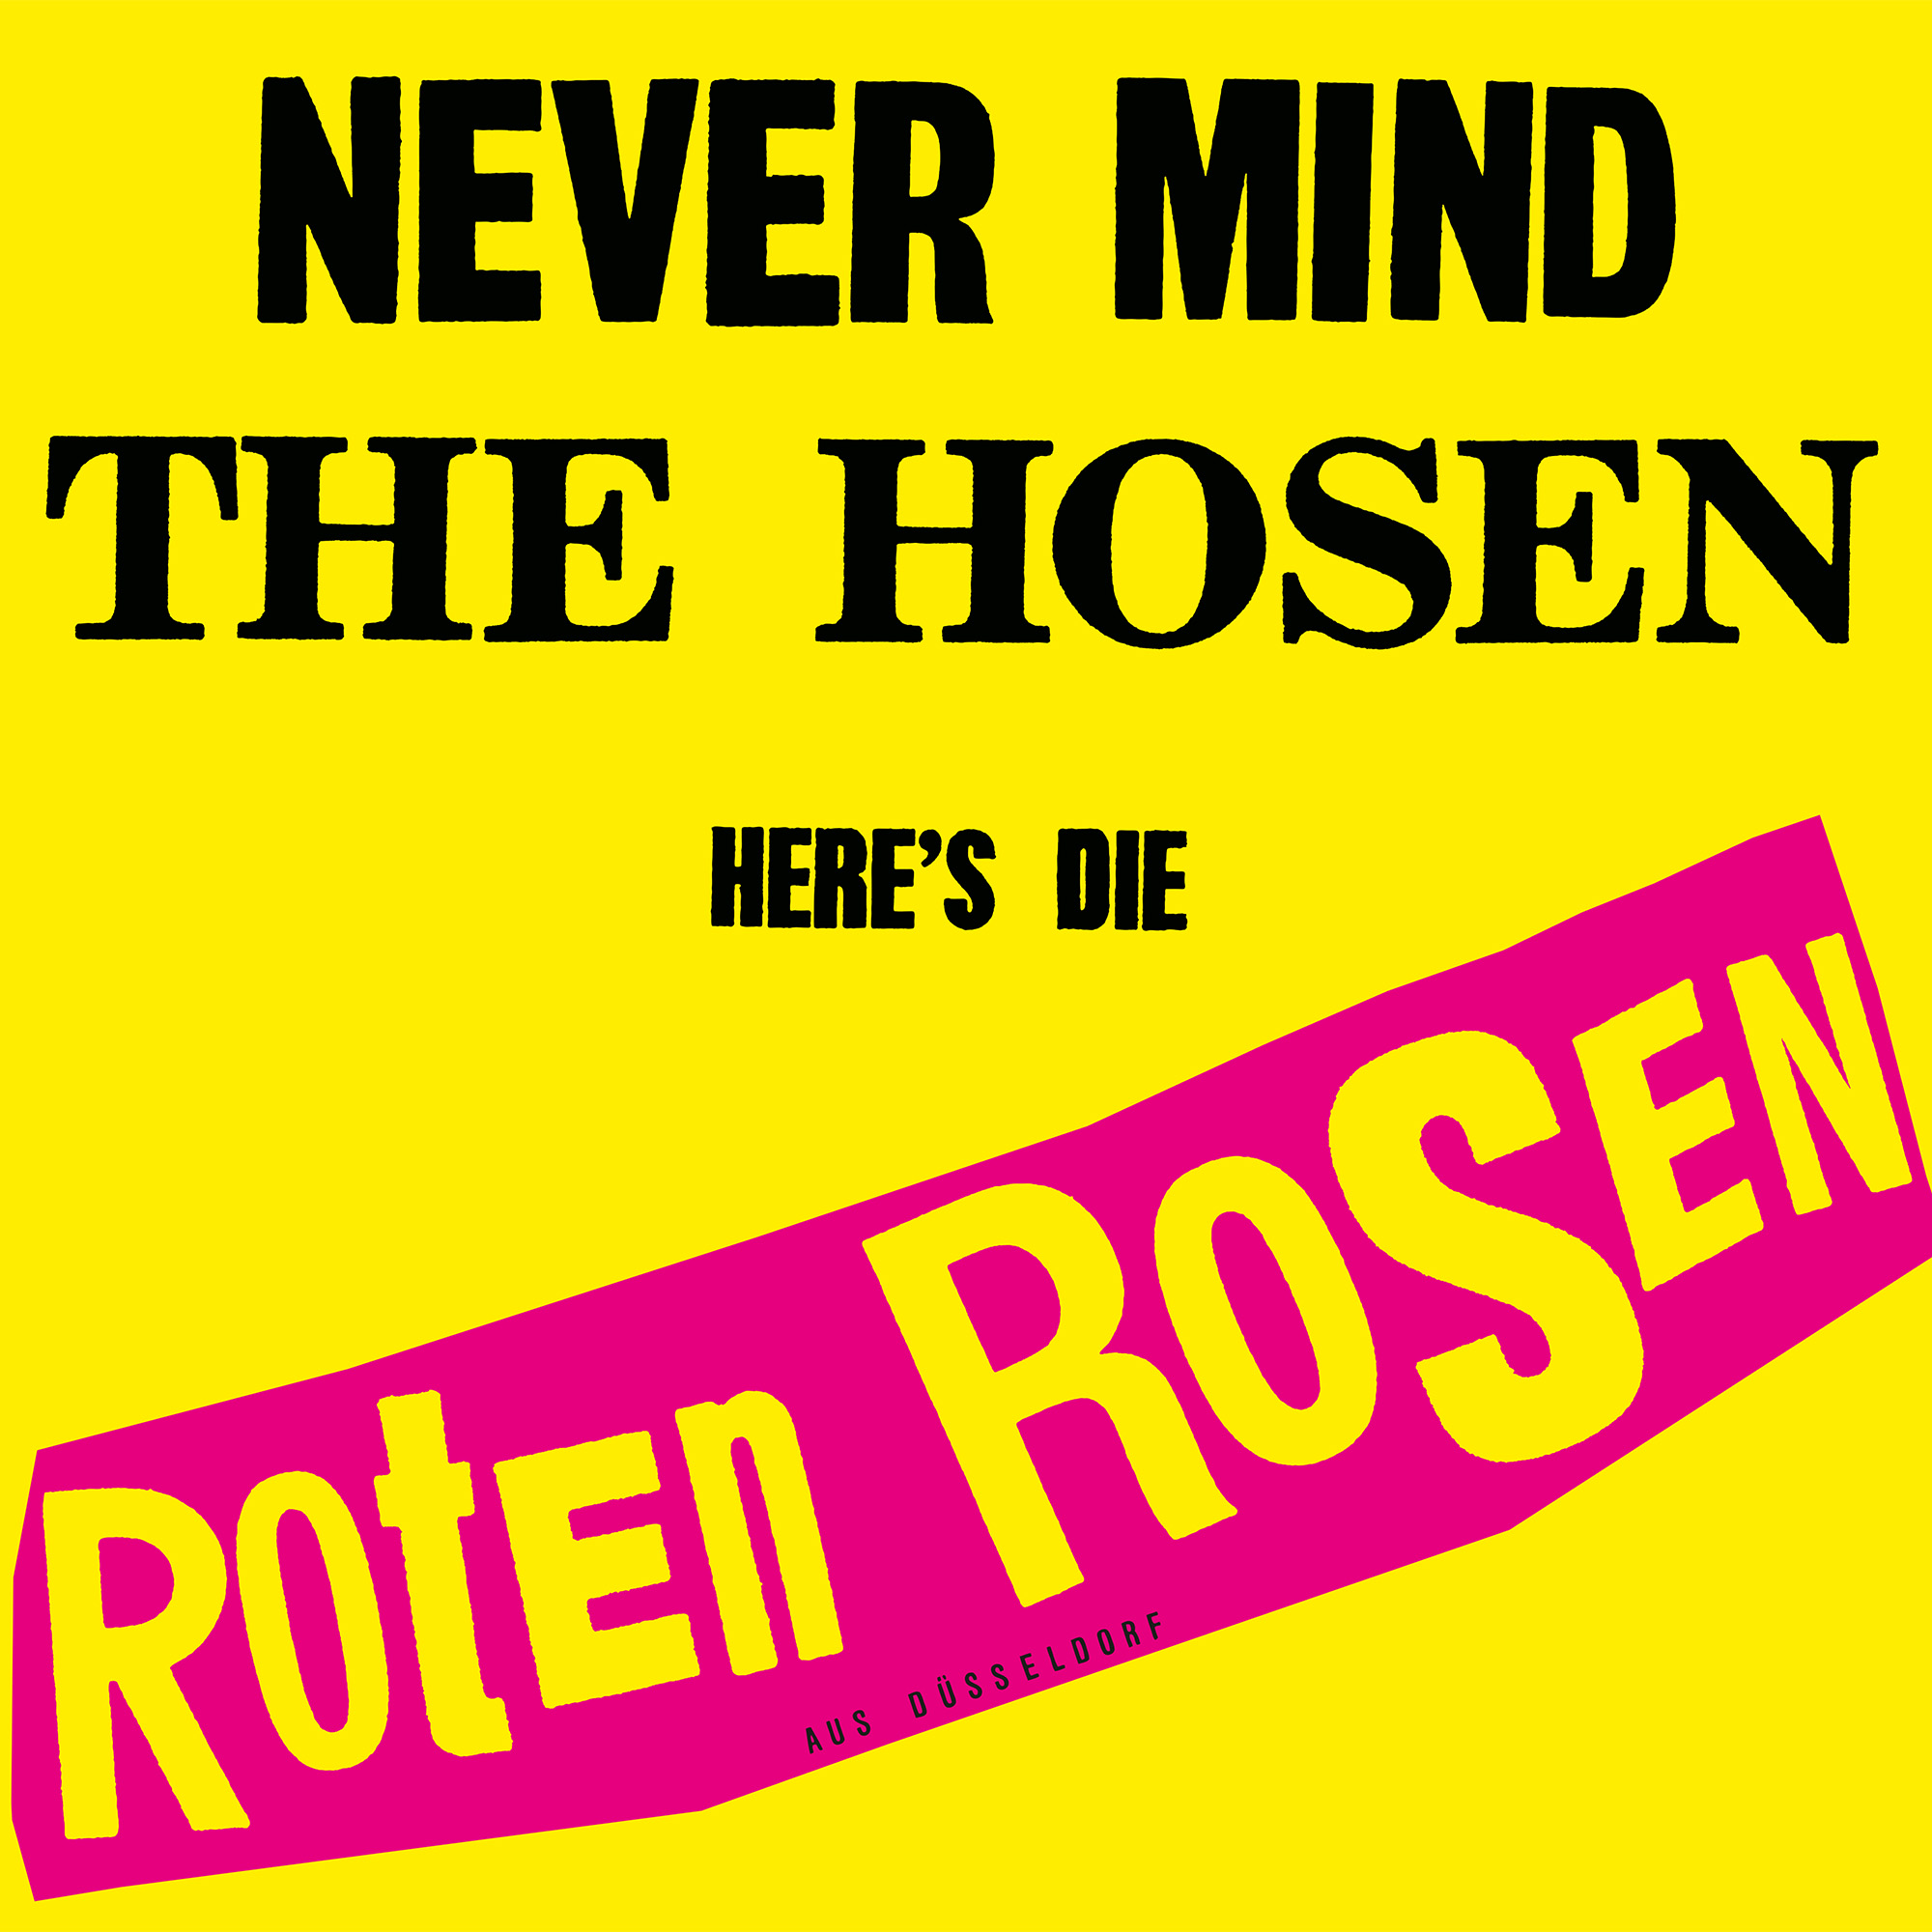 Roten Roten Rosen - Die Mind Rosen Hosen-Here\'s - Never Die The (Vinyl)